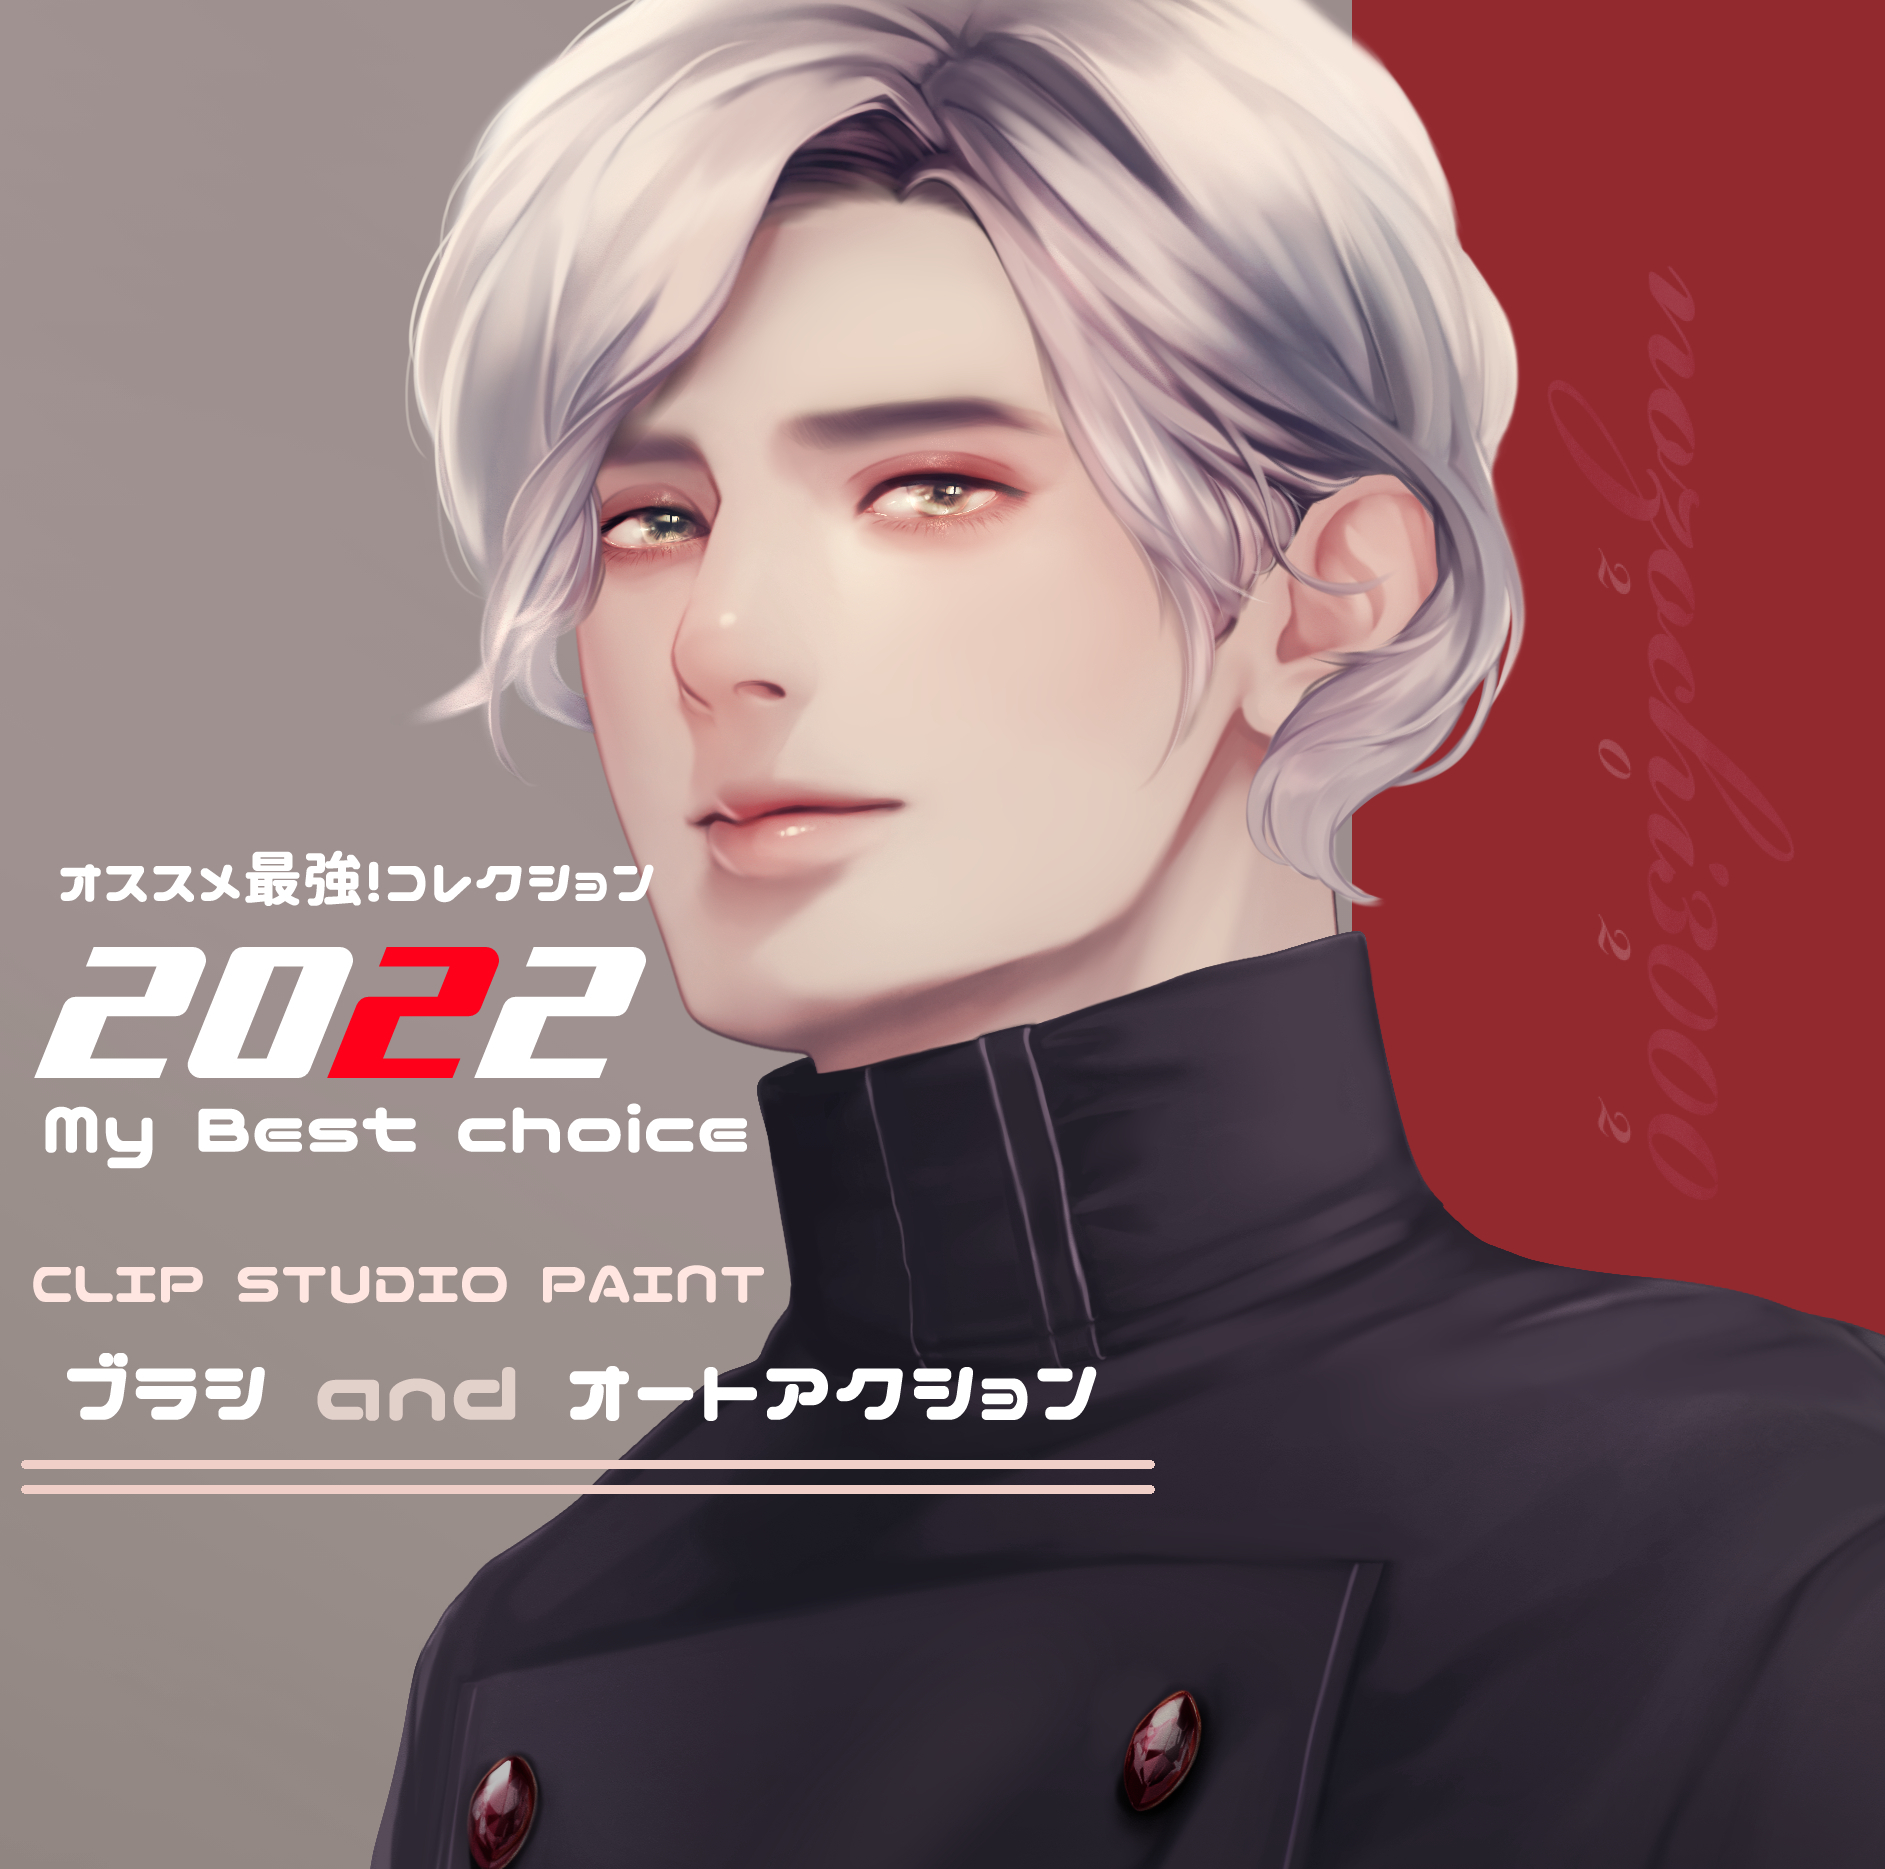 My Best choice-2022